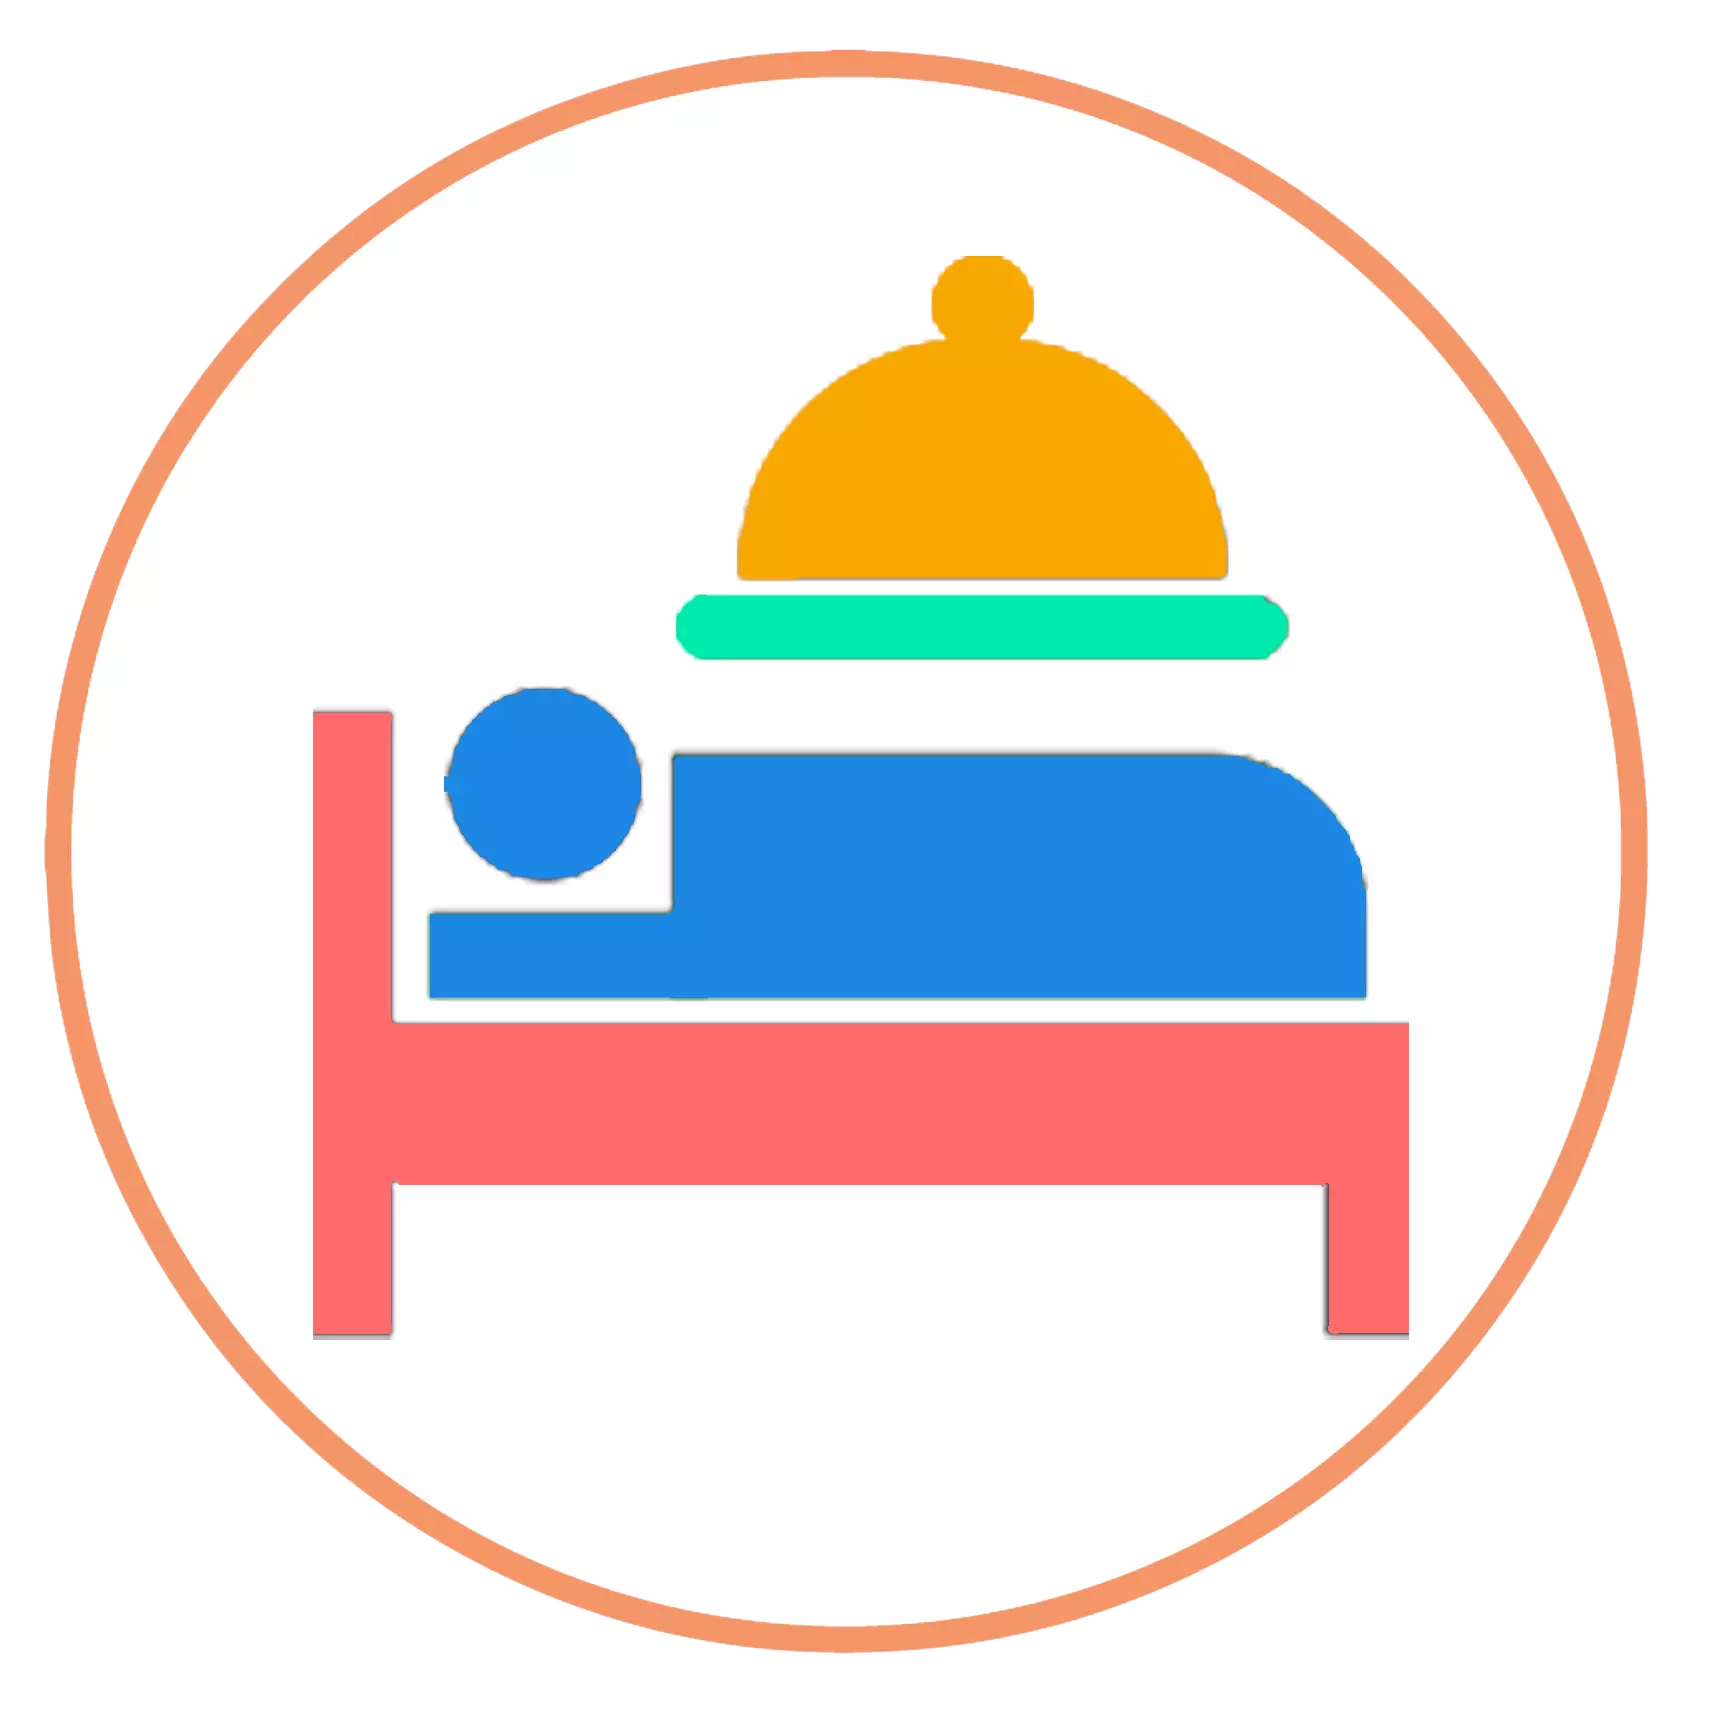 Bed & Breakfast Management Software